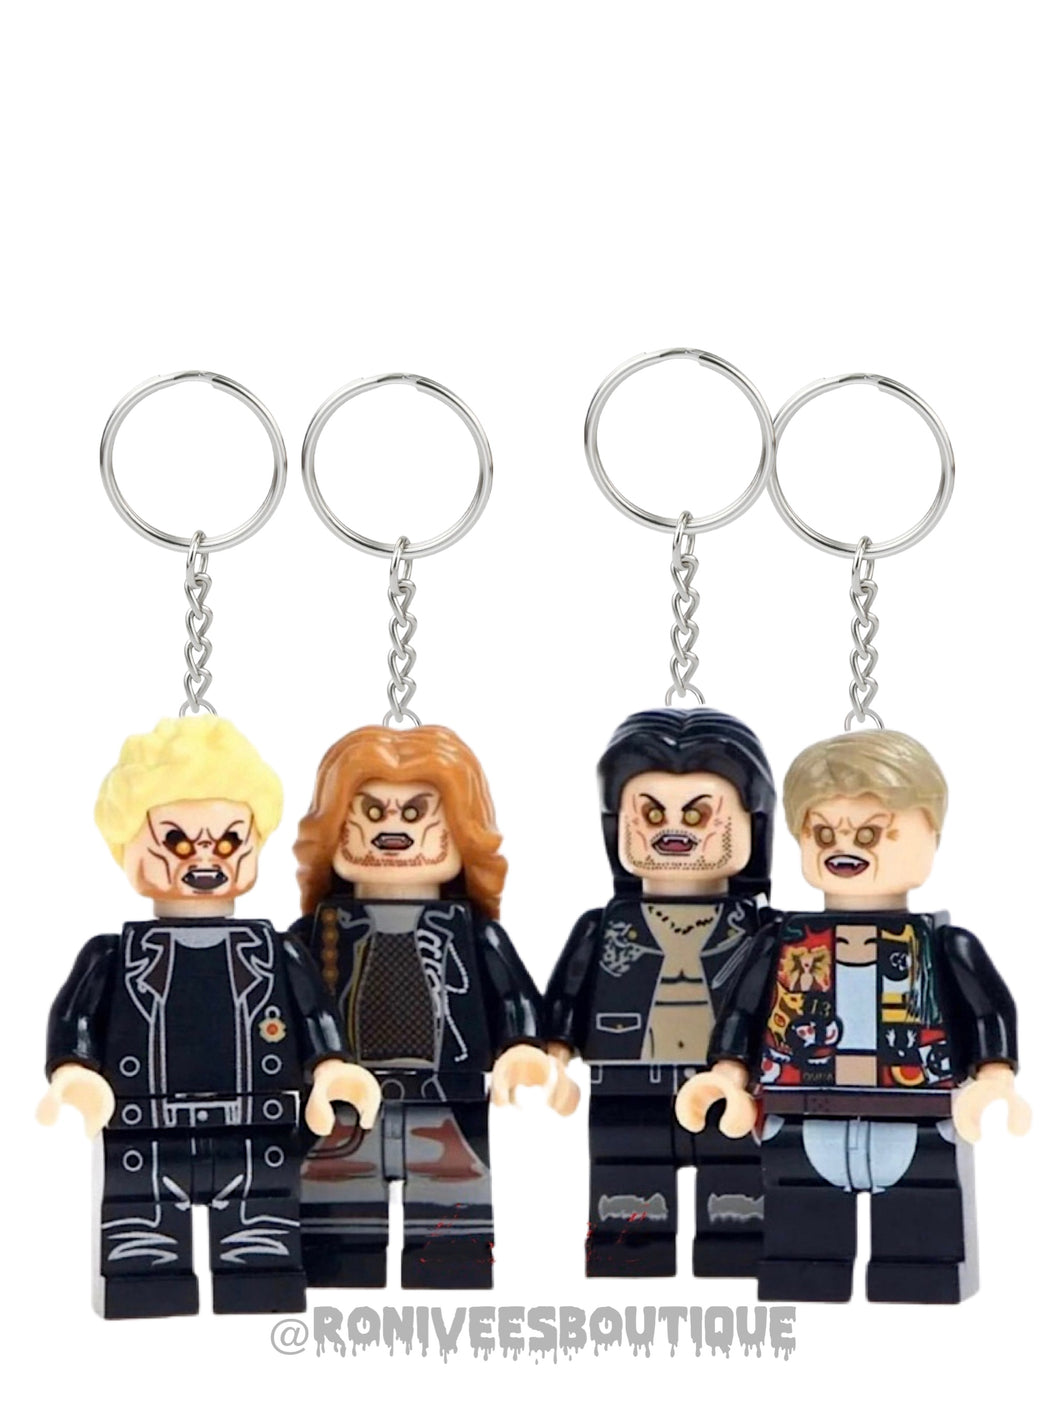 The Lost Boys Lego Keychains